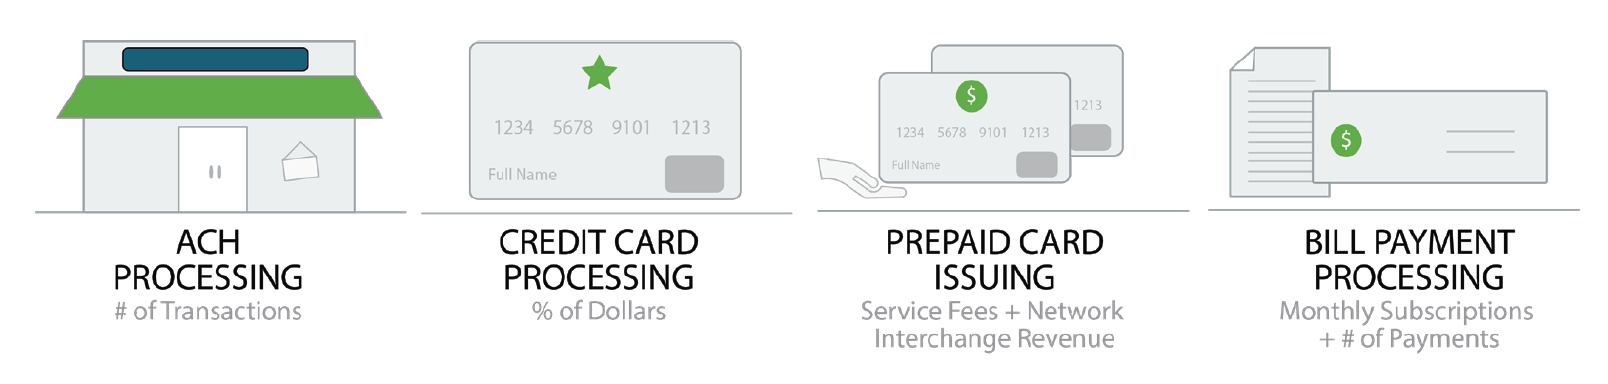 Merchant Card Program Infographic